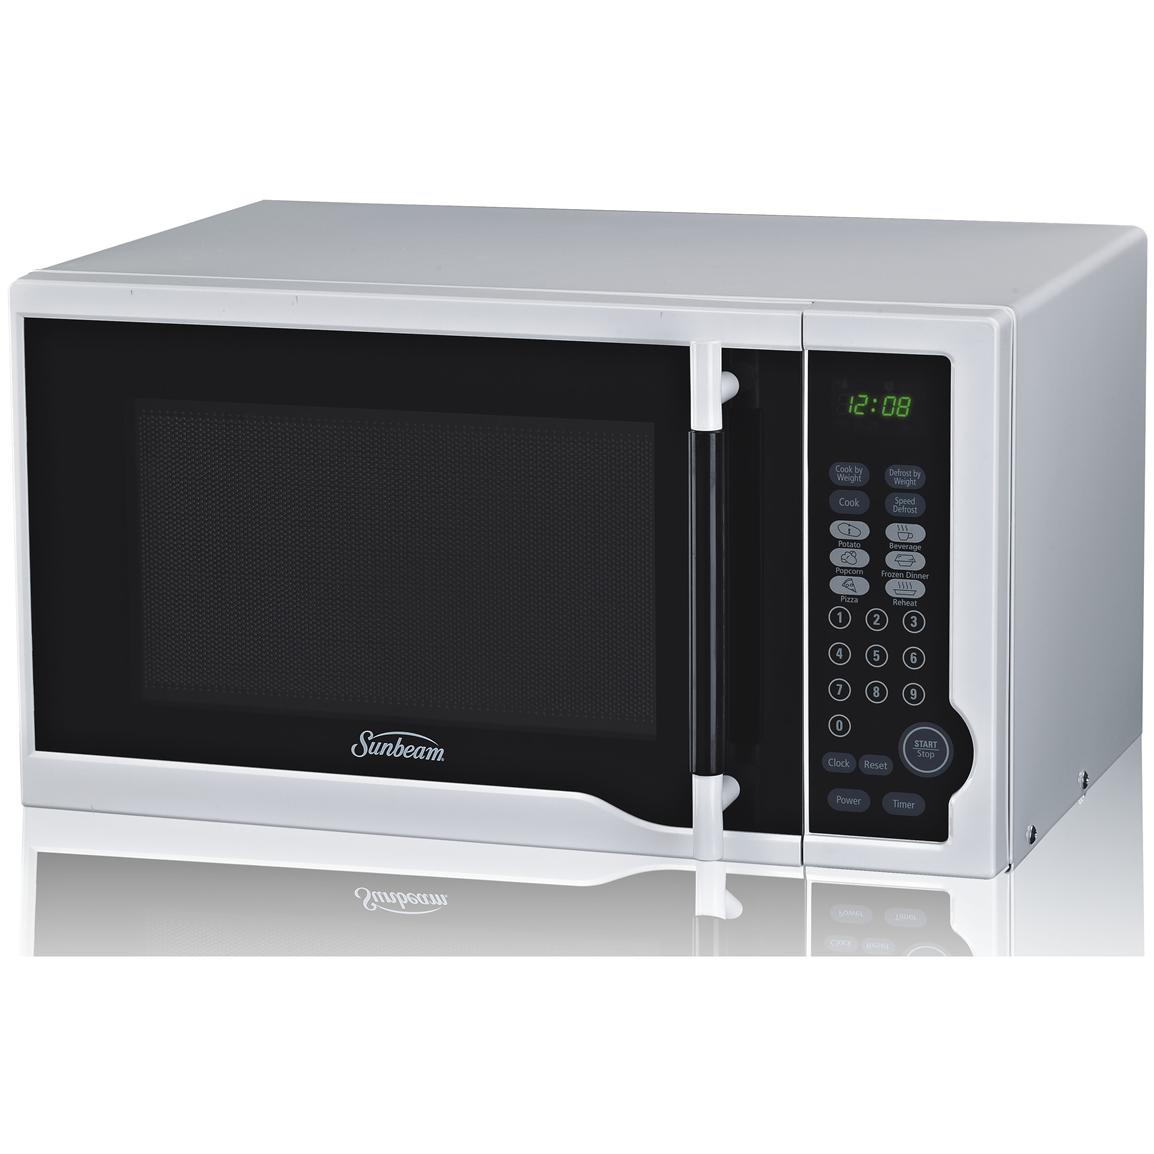 Sunbeam® 0.9 cu. ft. Digital Microwave Oven - 297399, Kitchen